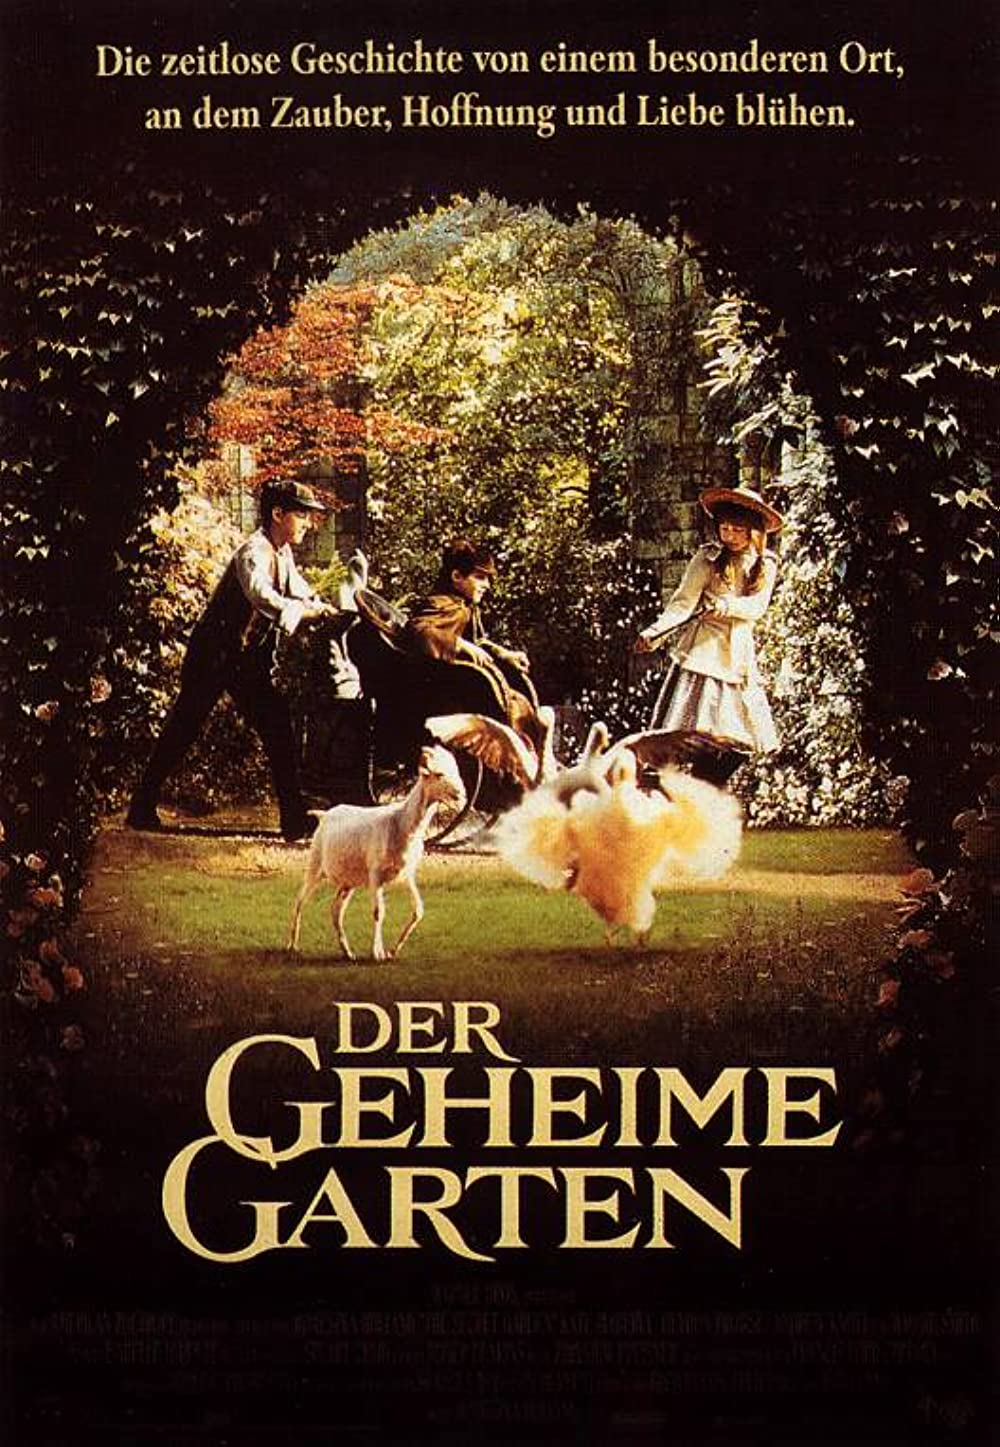 Filmbeschreibung zu Der geheime Garten (1993)